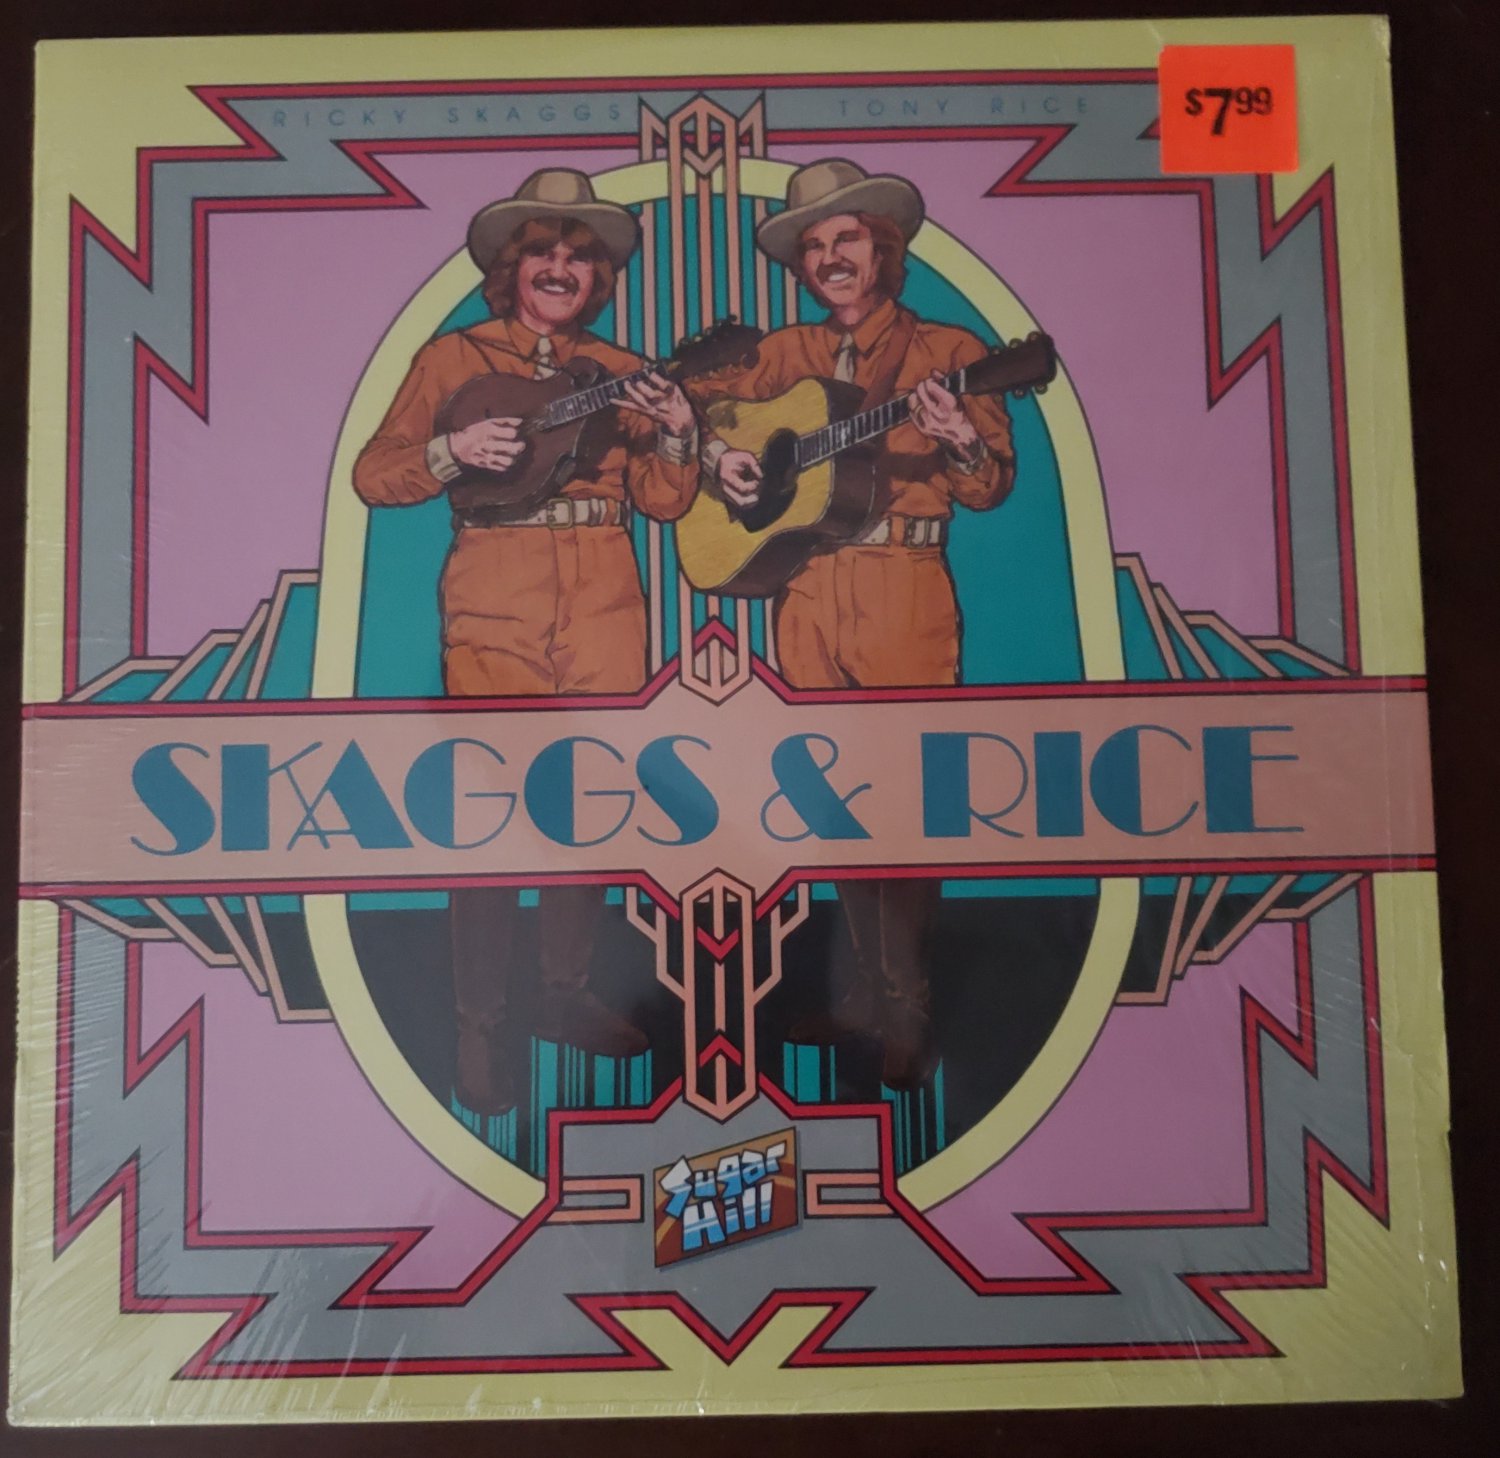 Ricky Skaggs & Tony Rice Old Time Country Bluegrass Folk 33 RPM Vinyl Record LP